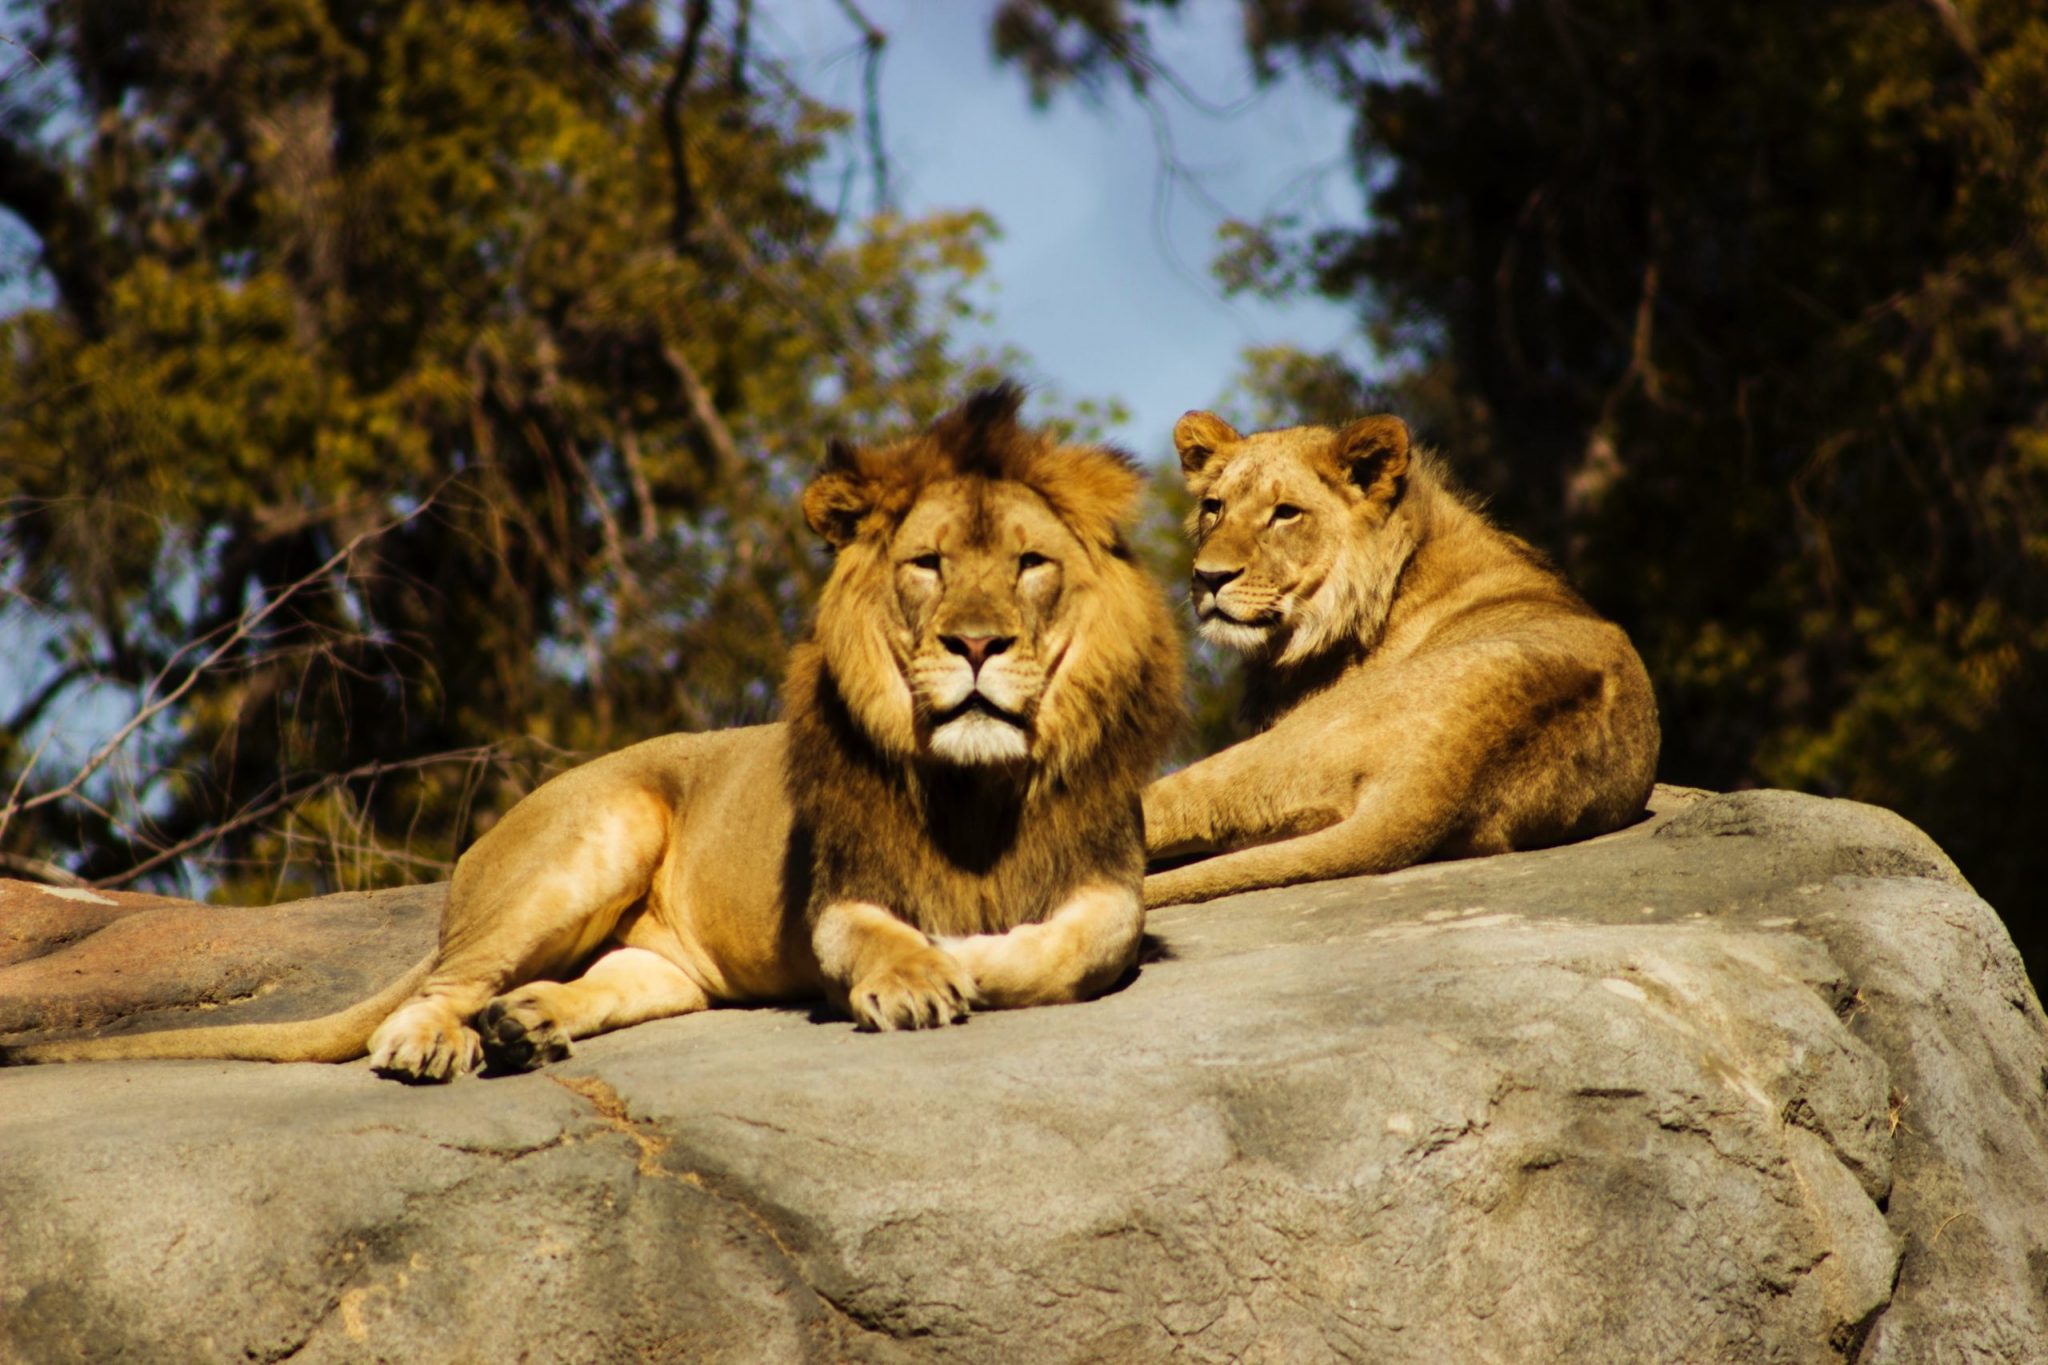 Sri Lanka: Lion at Dehiwala Zoo, Colombo confirmed positive for SARS-CoV-2